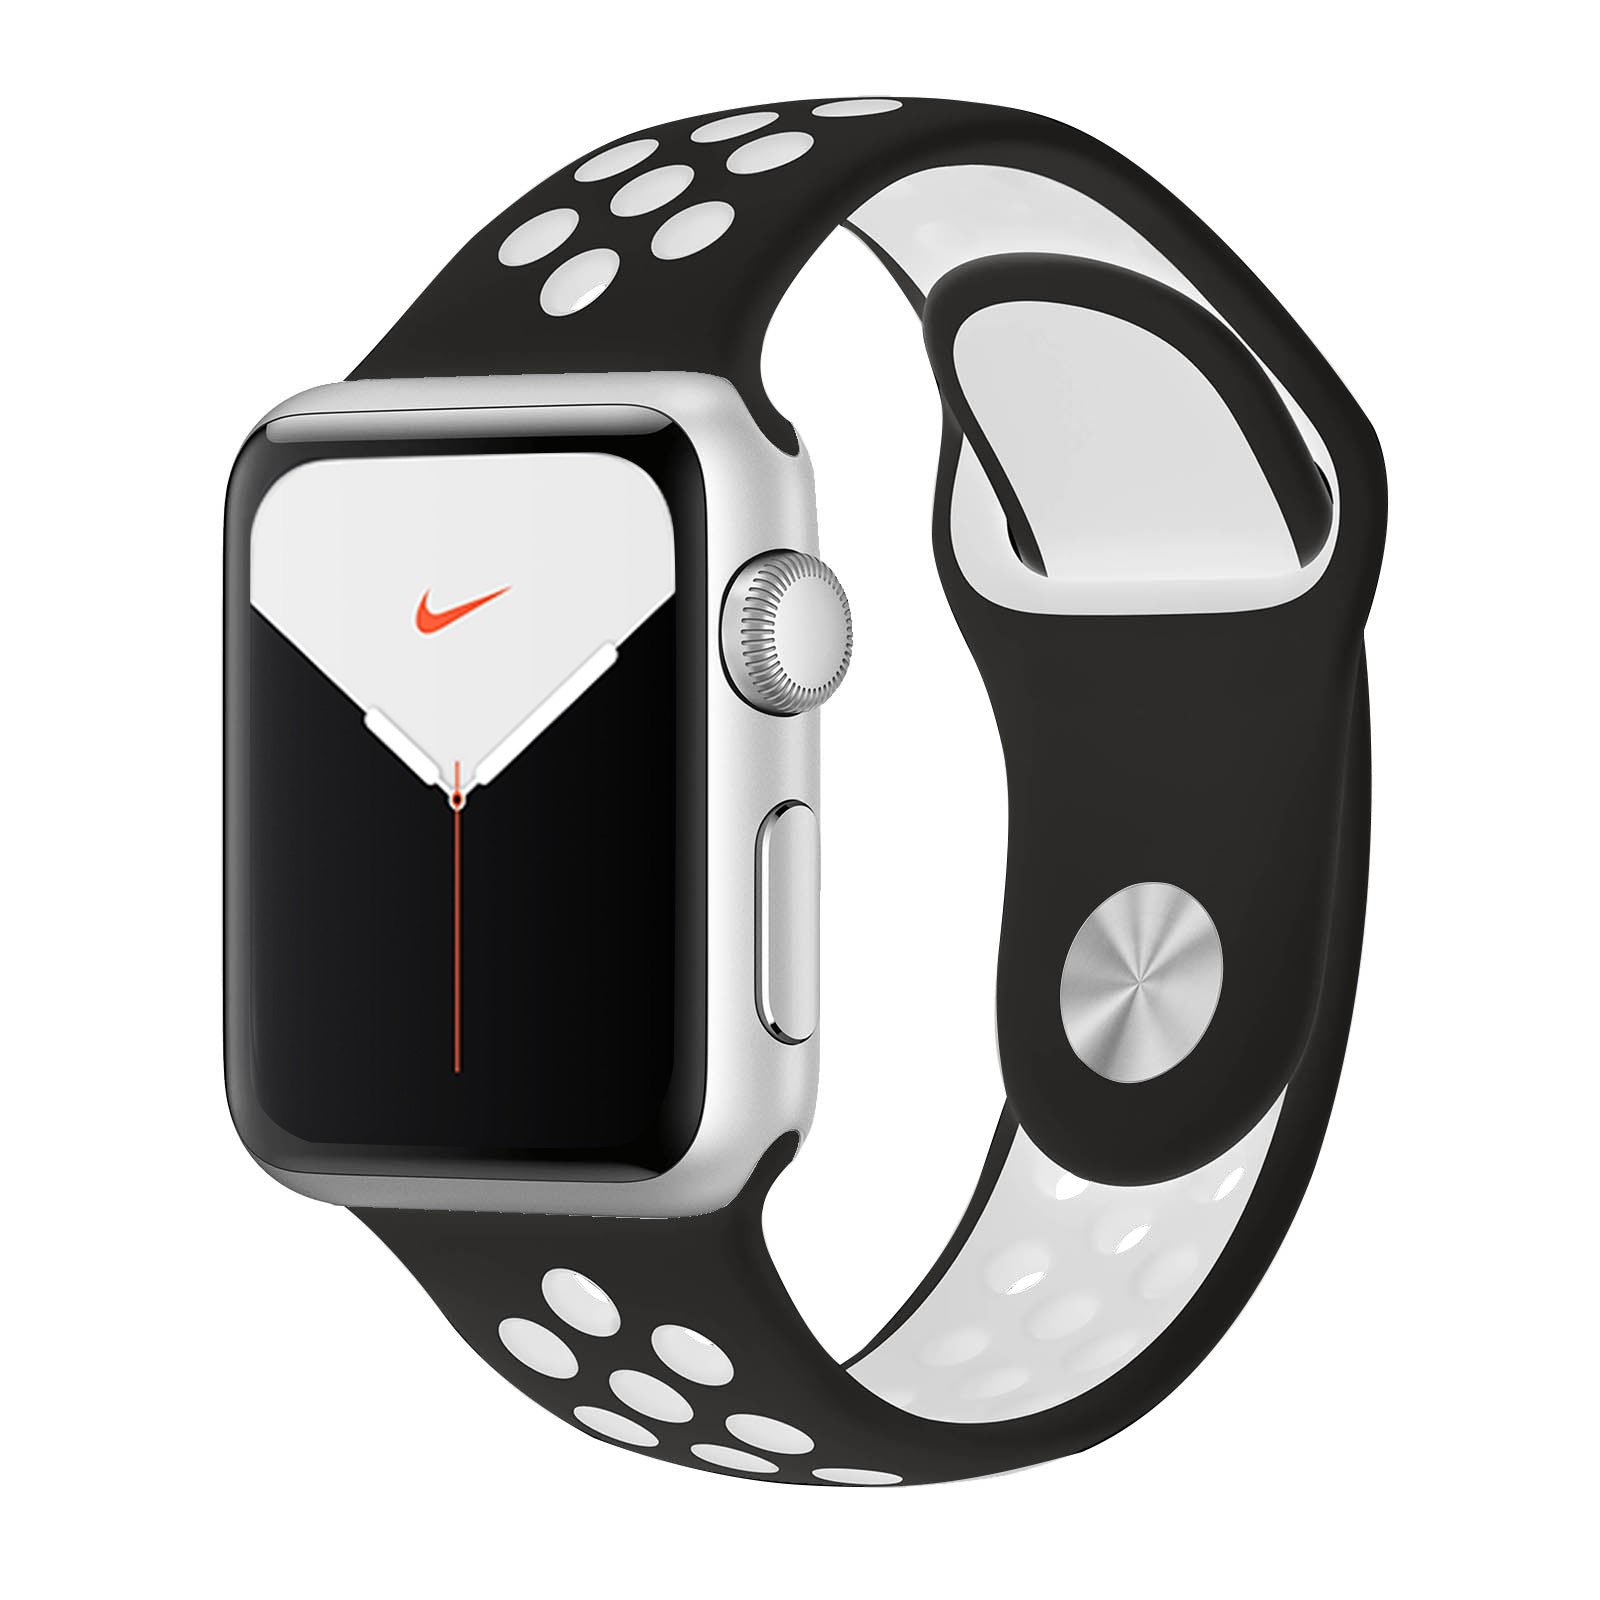 Apple Watch Series 5 Nike Aluminum 44mm Silver Good - Unlocked 44mm Silver Good